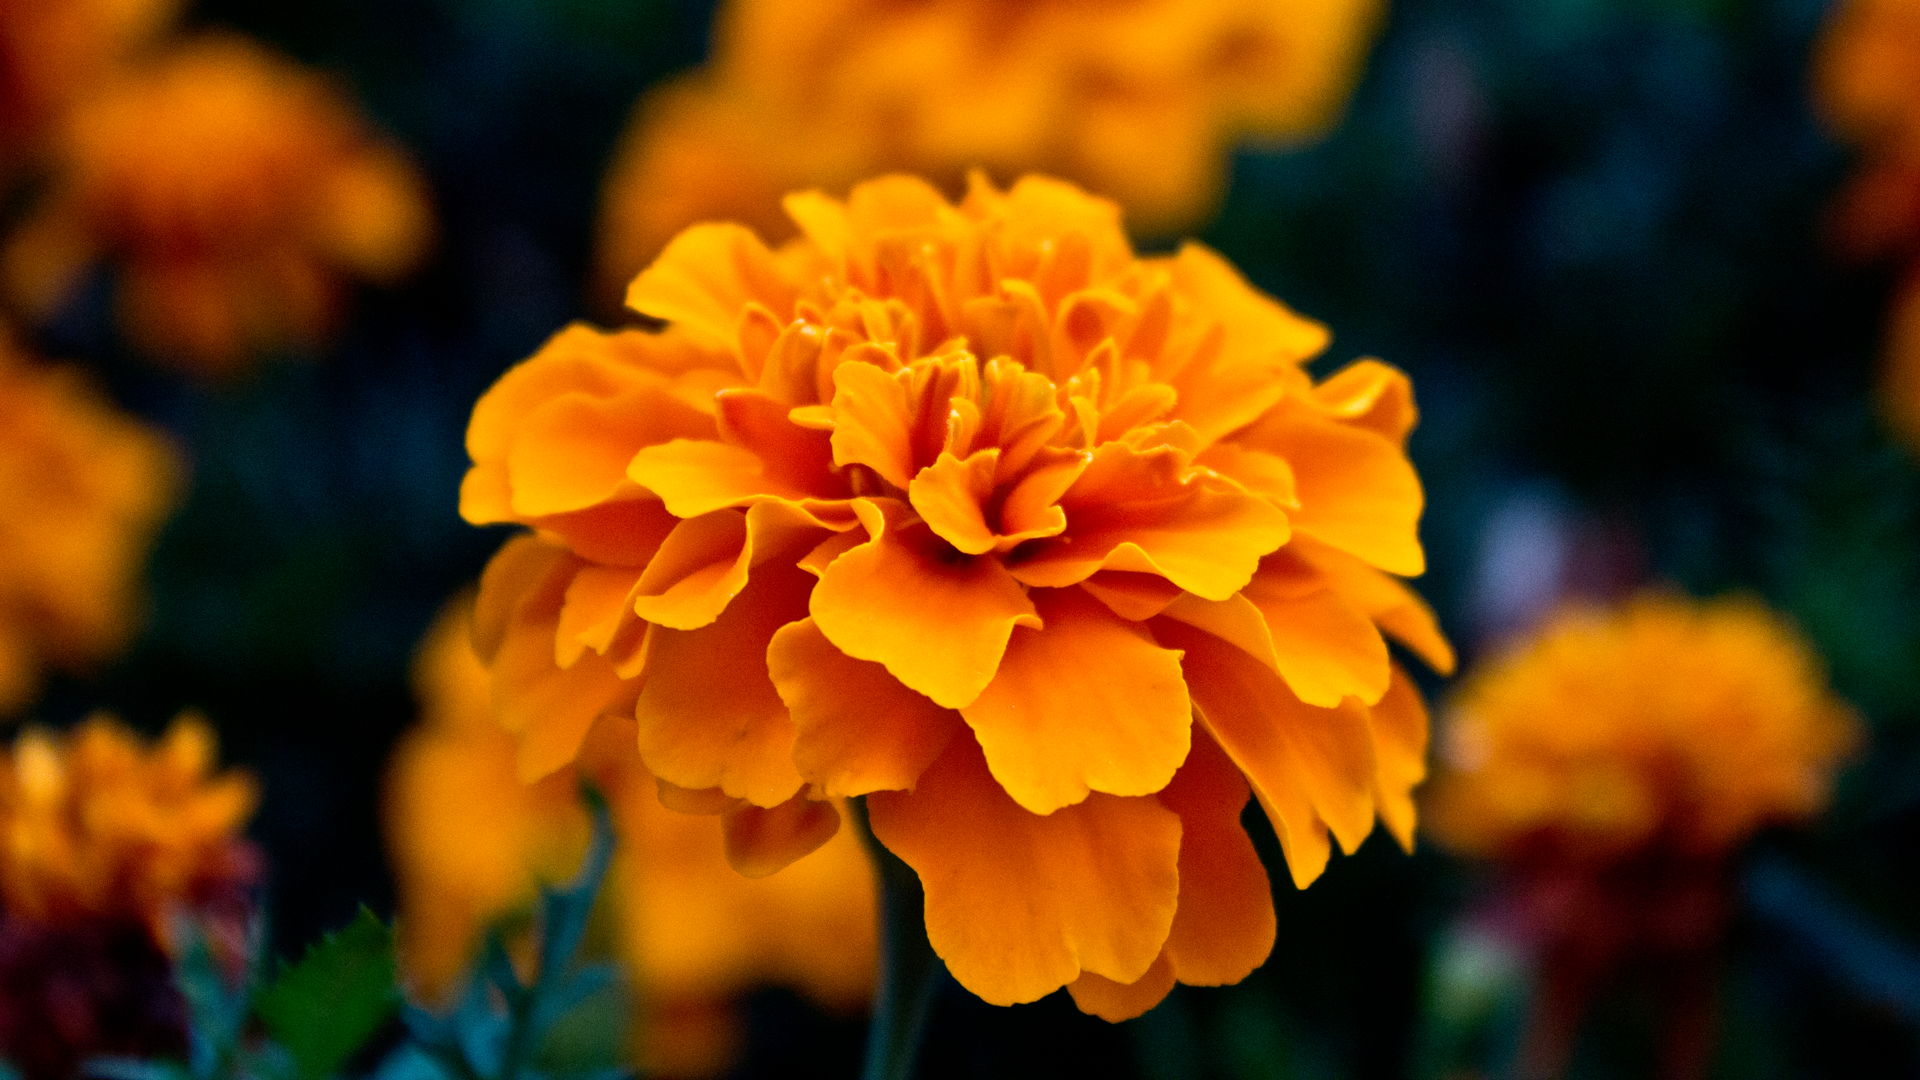 amazing flowers orange